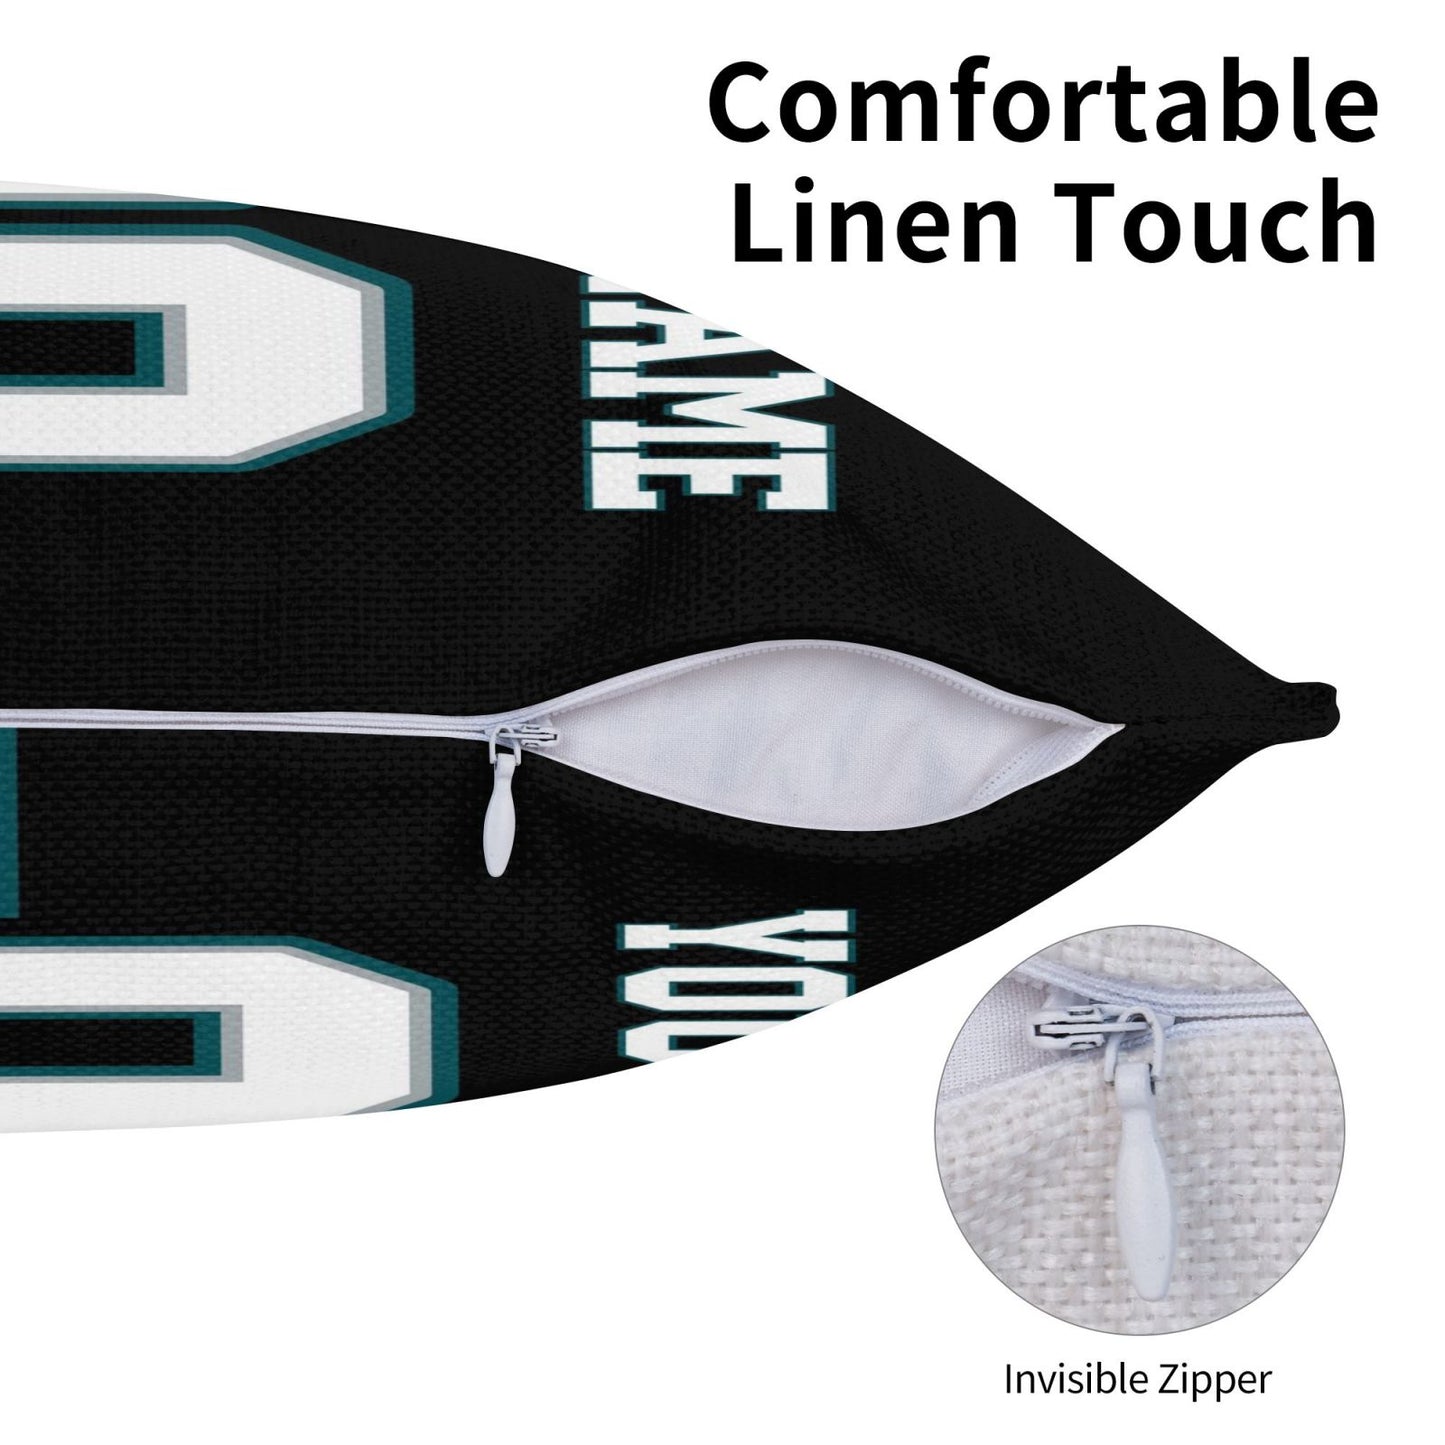 Custom Black Philadelphia Eagles Decorative Throw Pillow Case - Print Personalized Football Team Fans Name & Number Birthday Gift